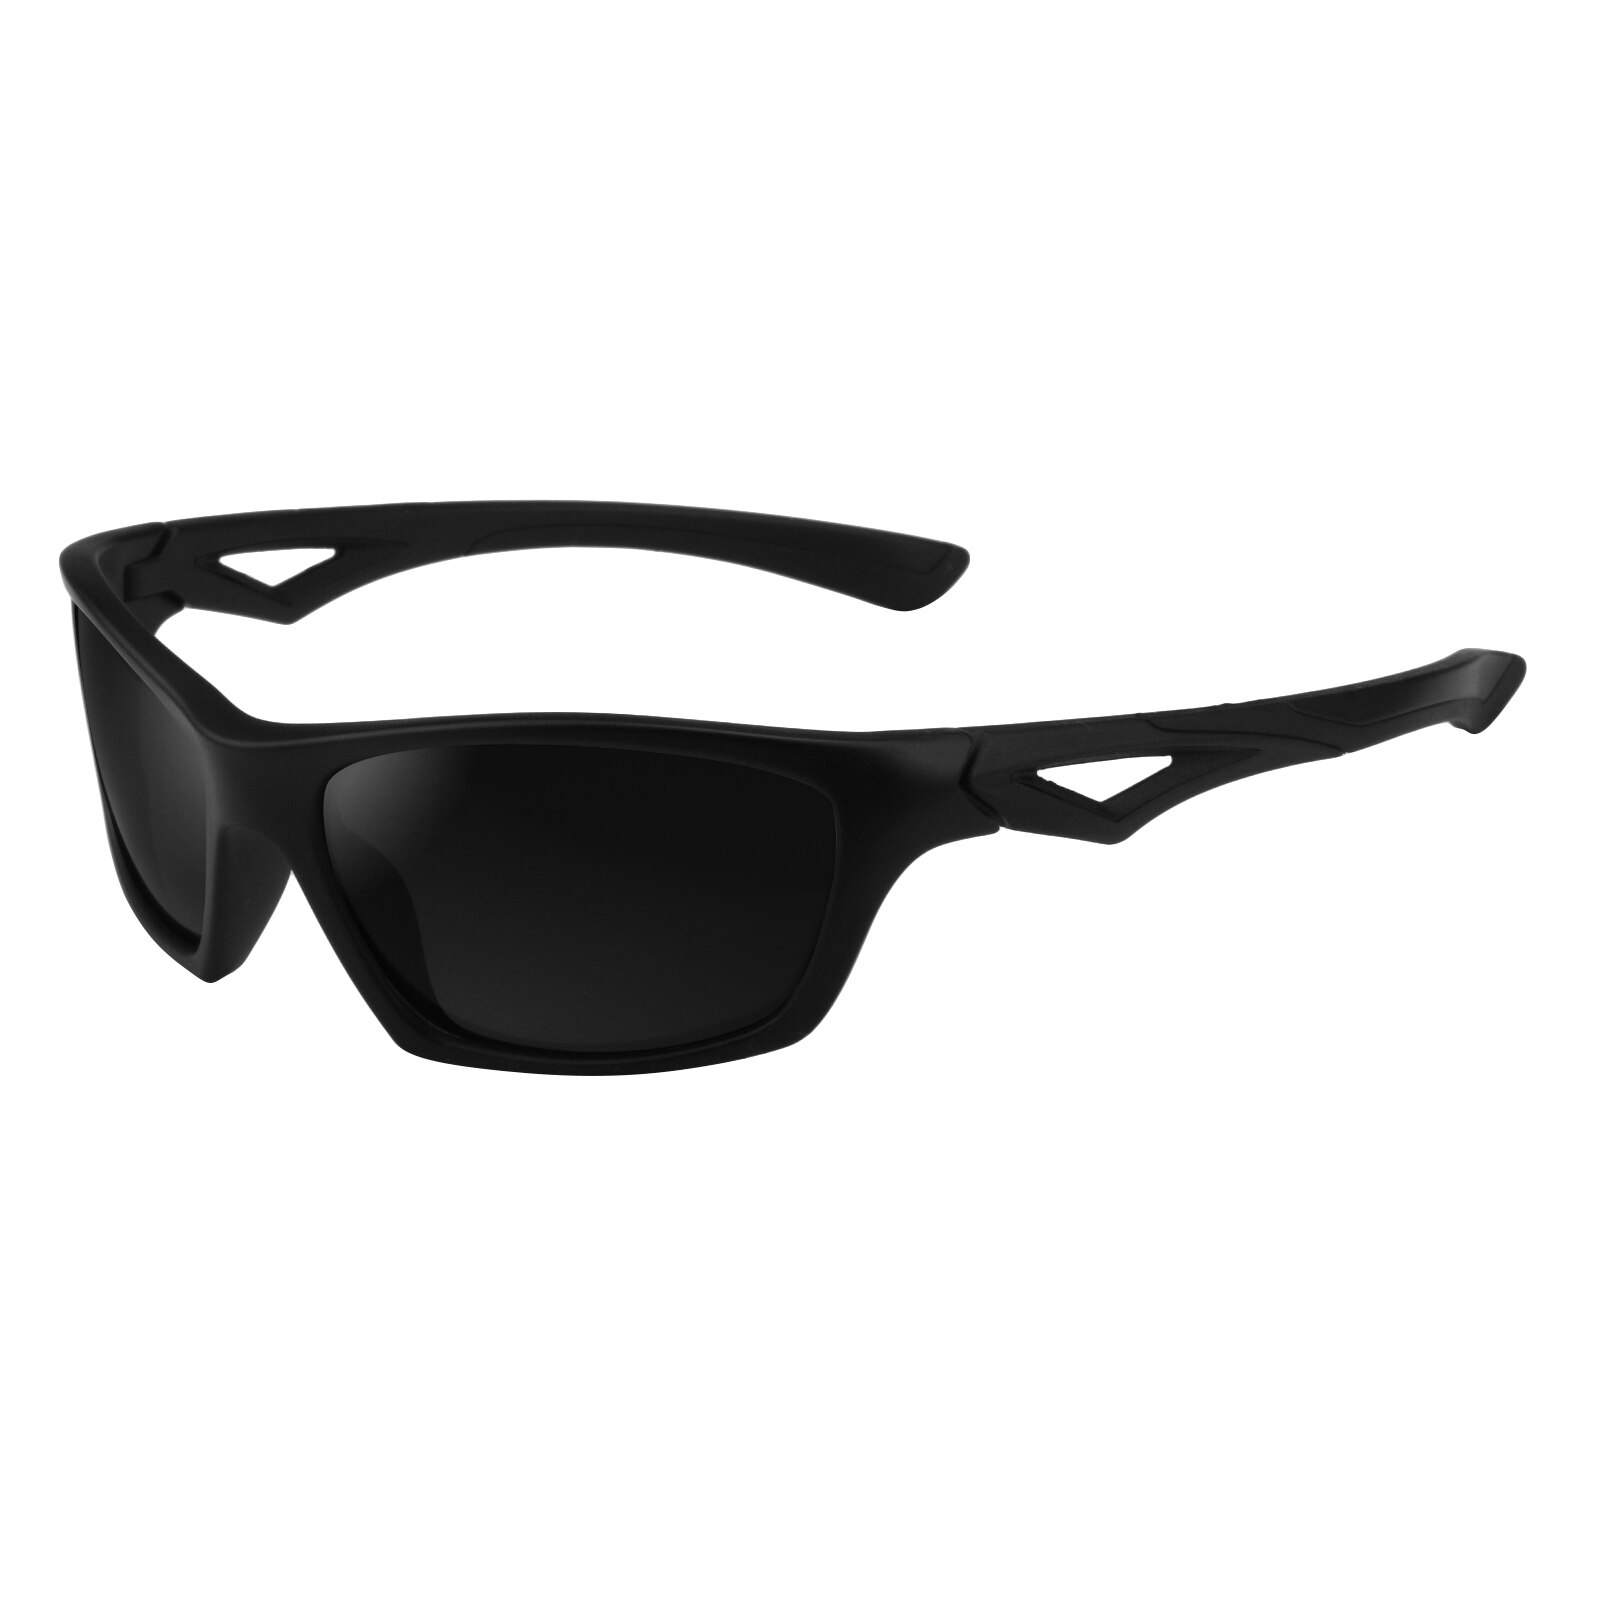 Kids Polarized Sunglasses TR90 Unbreakable Flexible Sport Glasses UV Protection for Boys Girls Age 3-10 Child Eyewear UV400: Black l Black